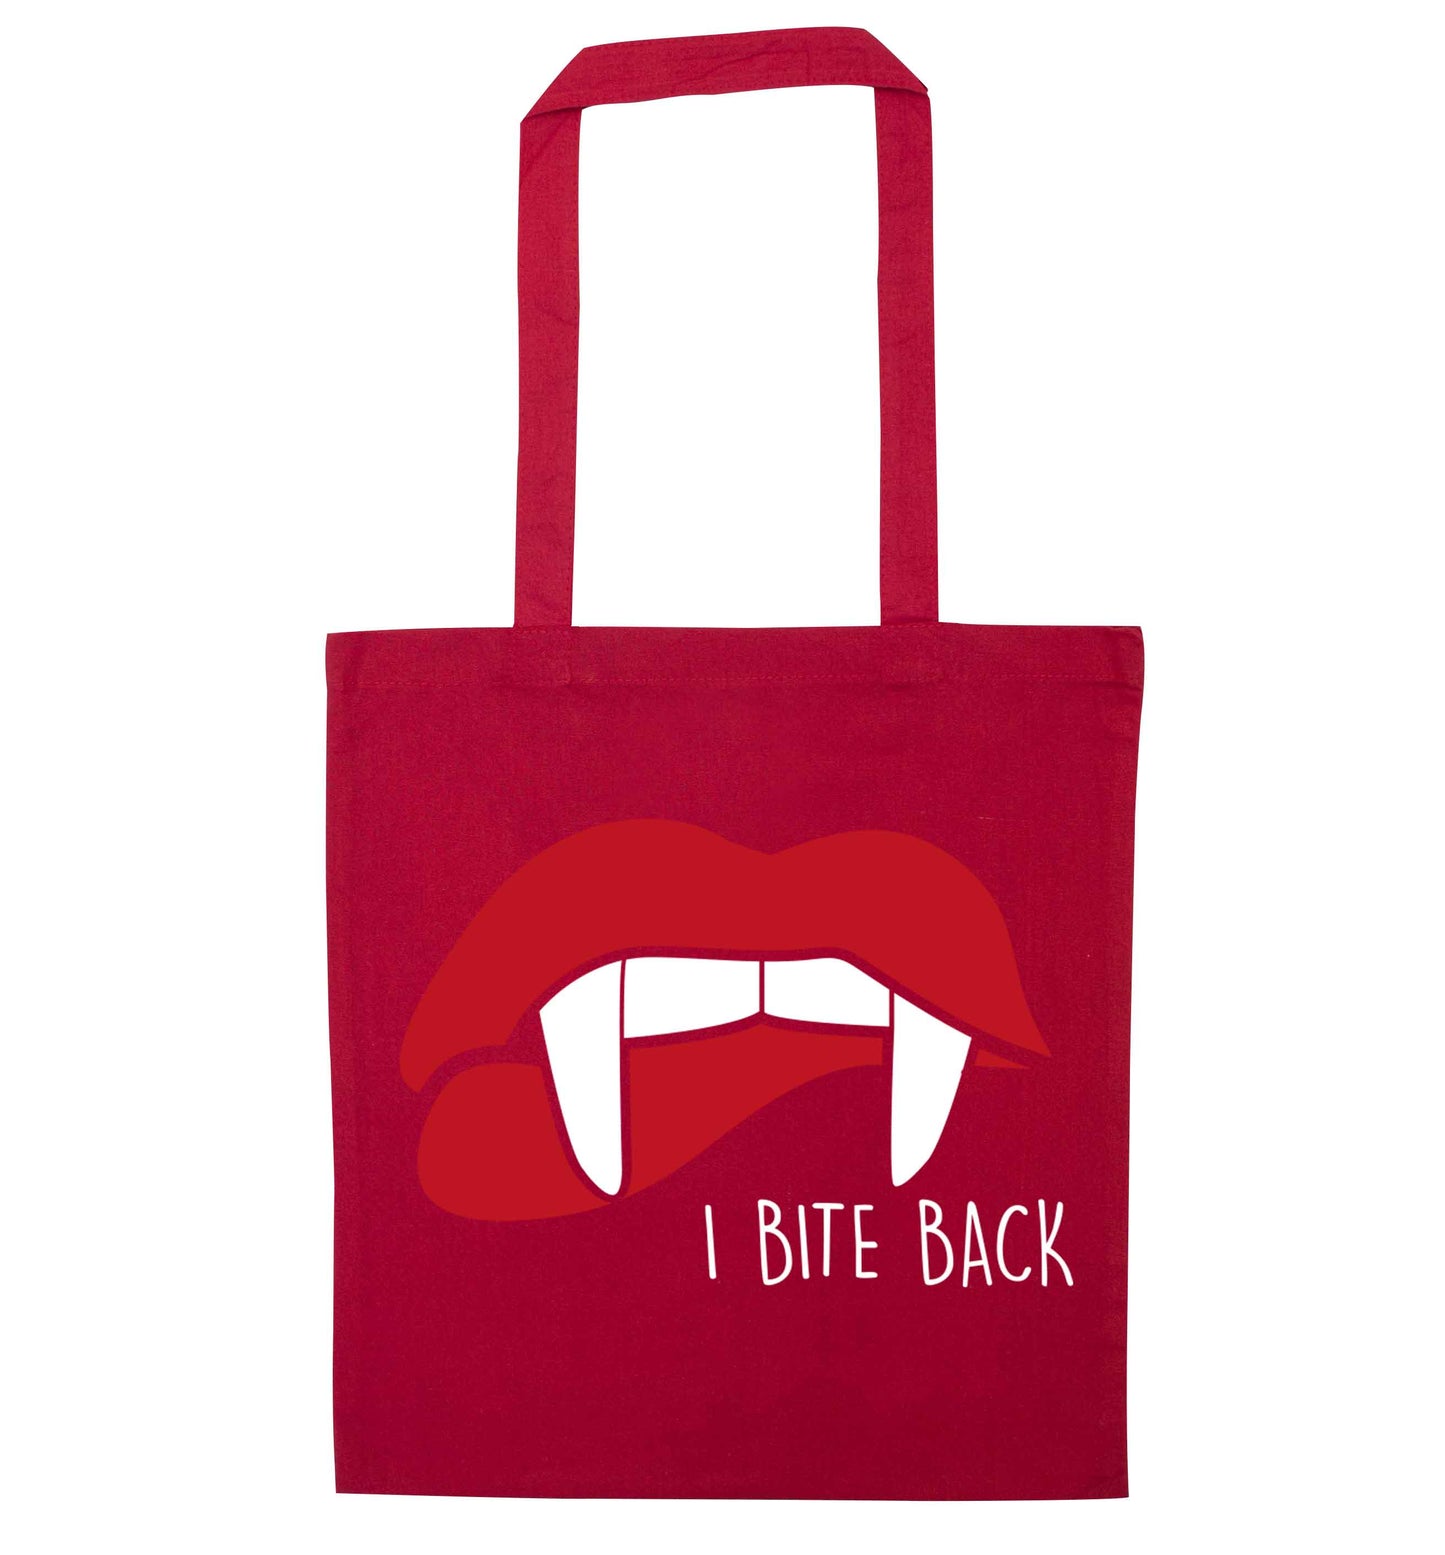 I bite back red tote bag